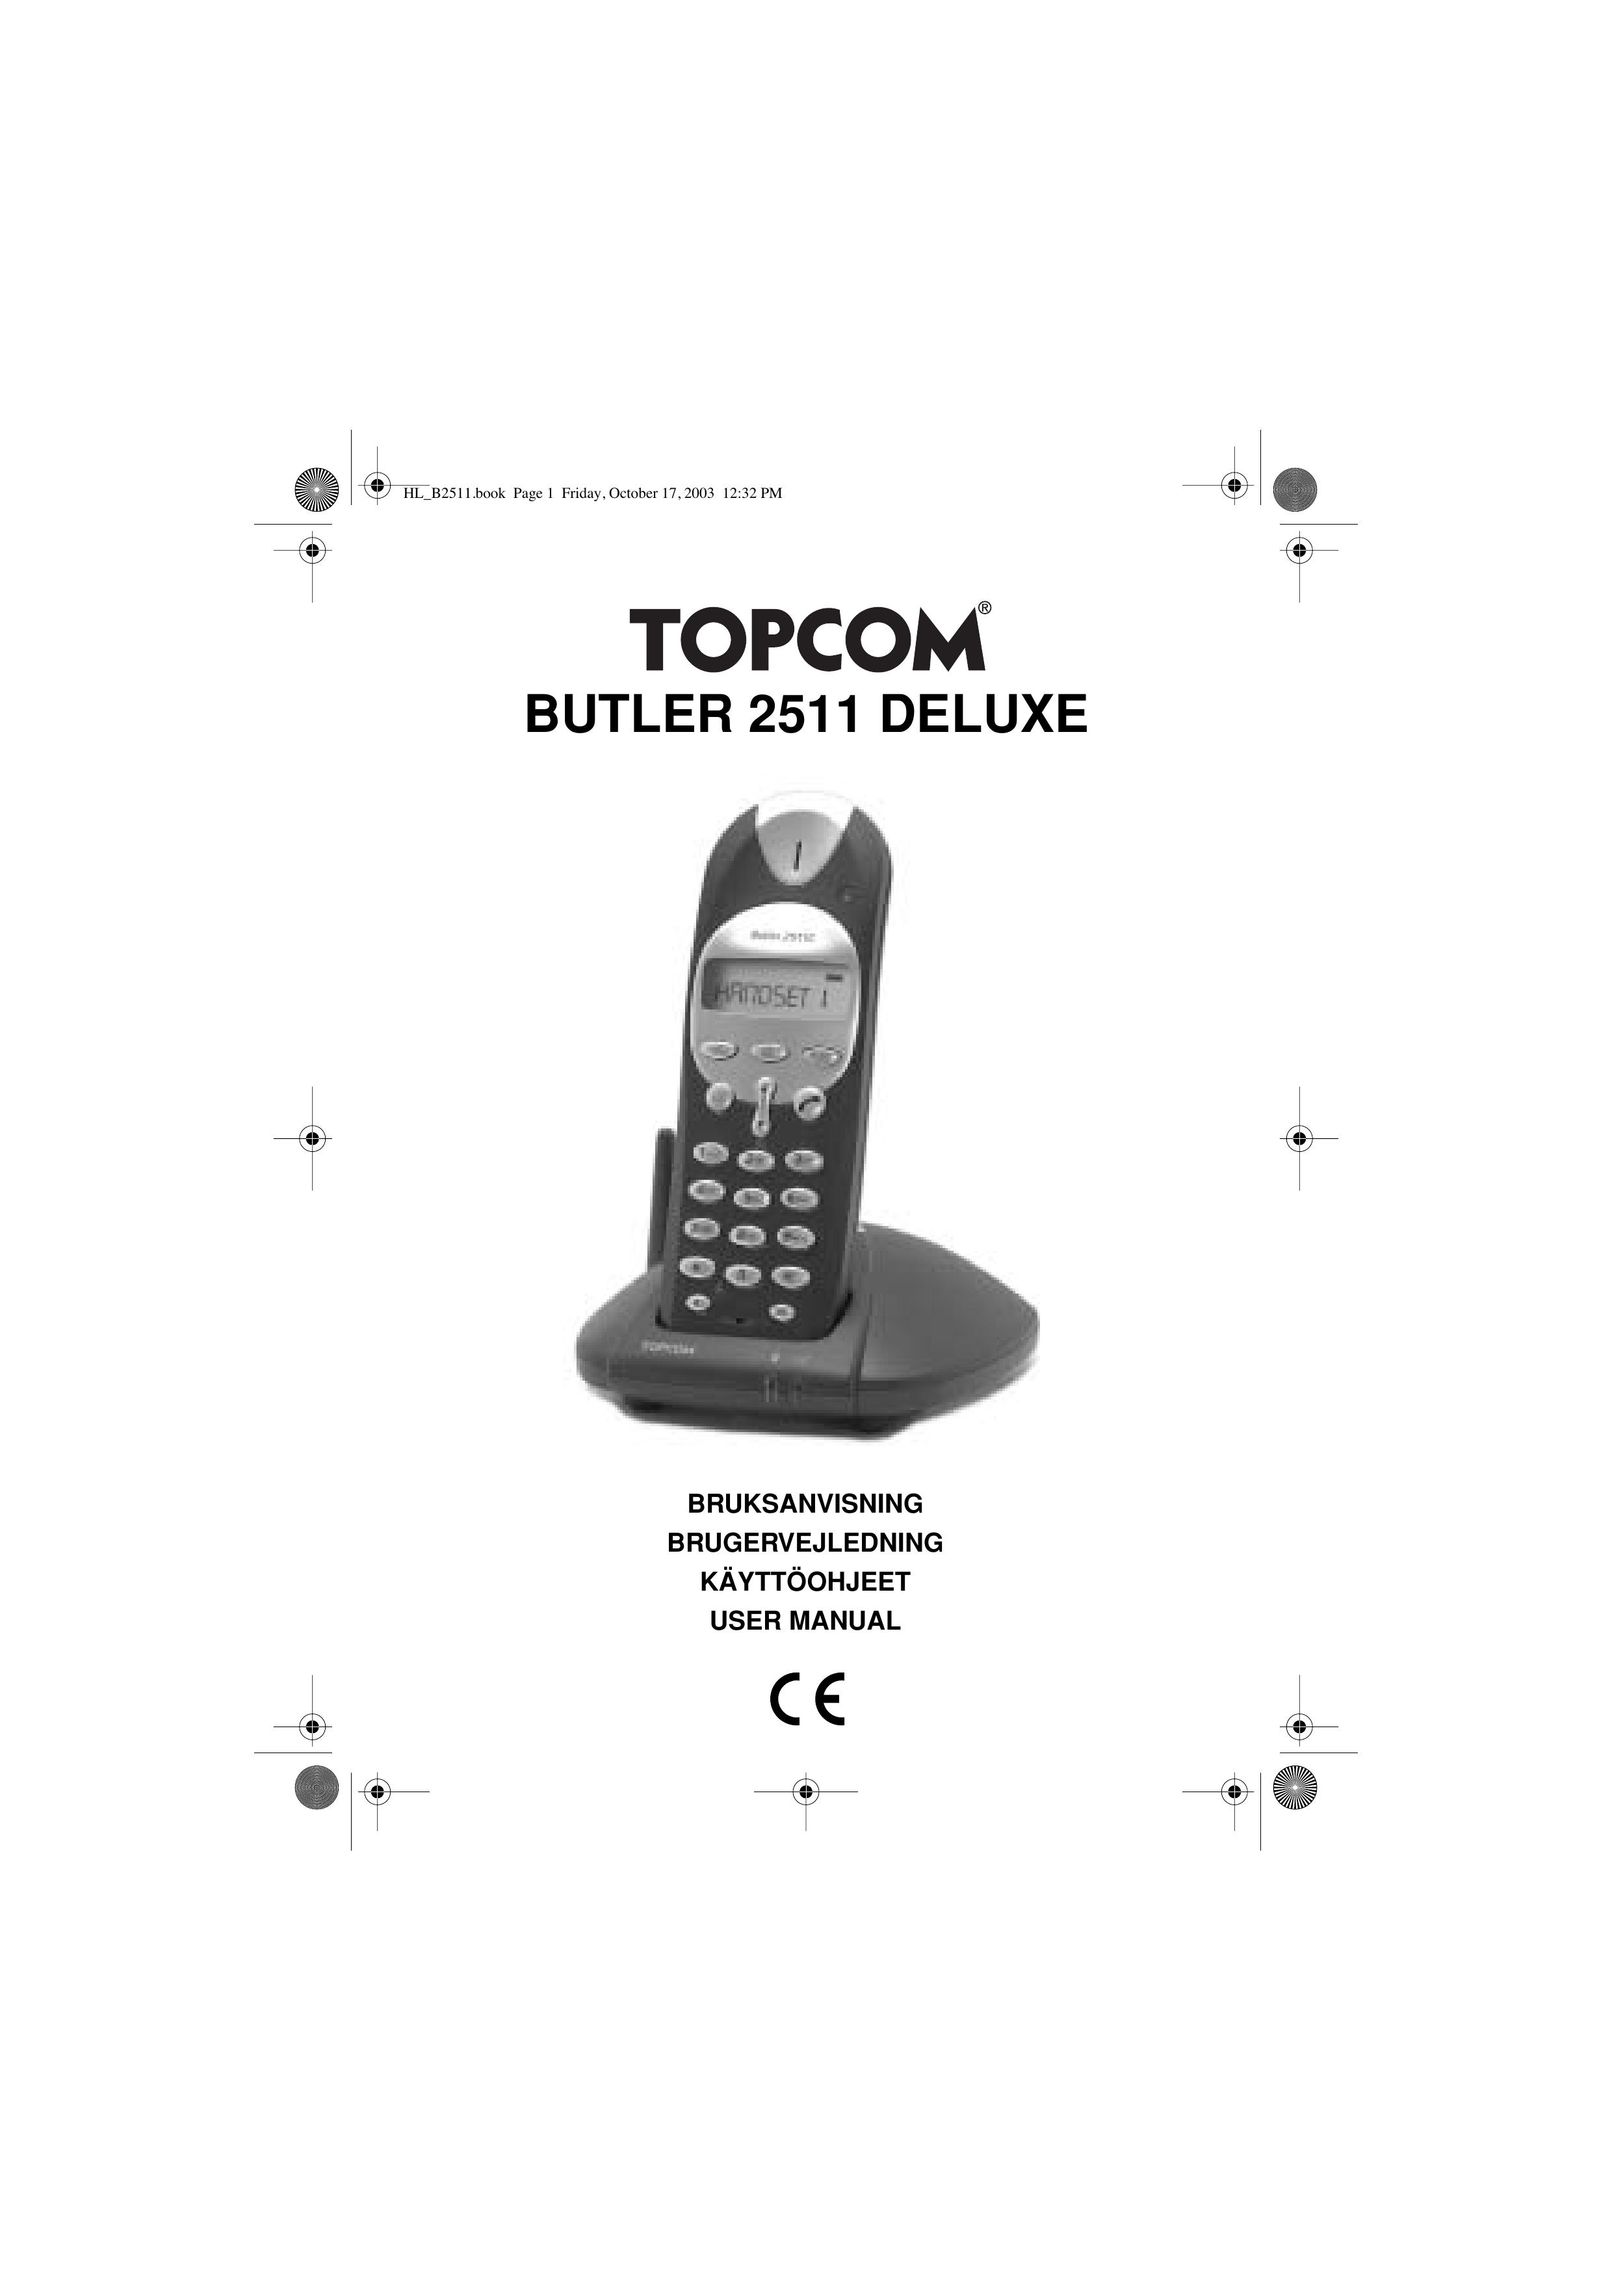 Topcom 2511 Deluxe Cordless Telephone User Manual